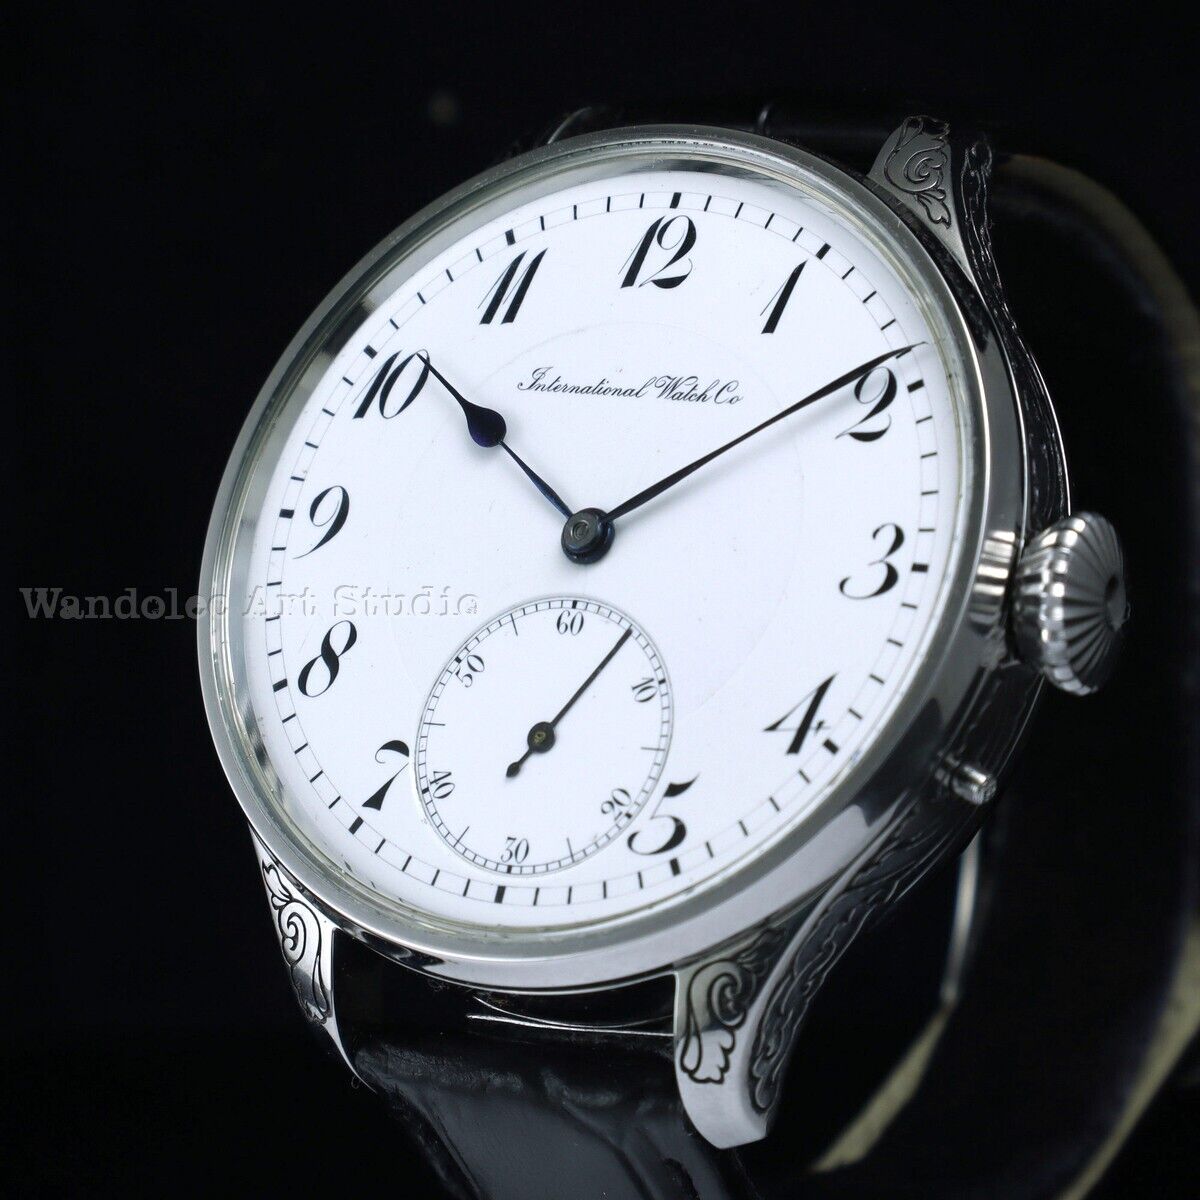 Vintage Mens Wristwatch Stainless Steel International Watch Co IWC 1910 Movement